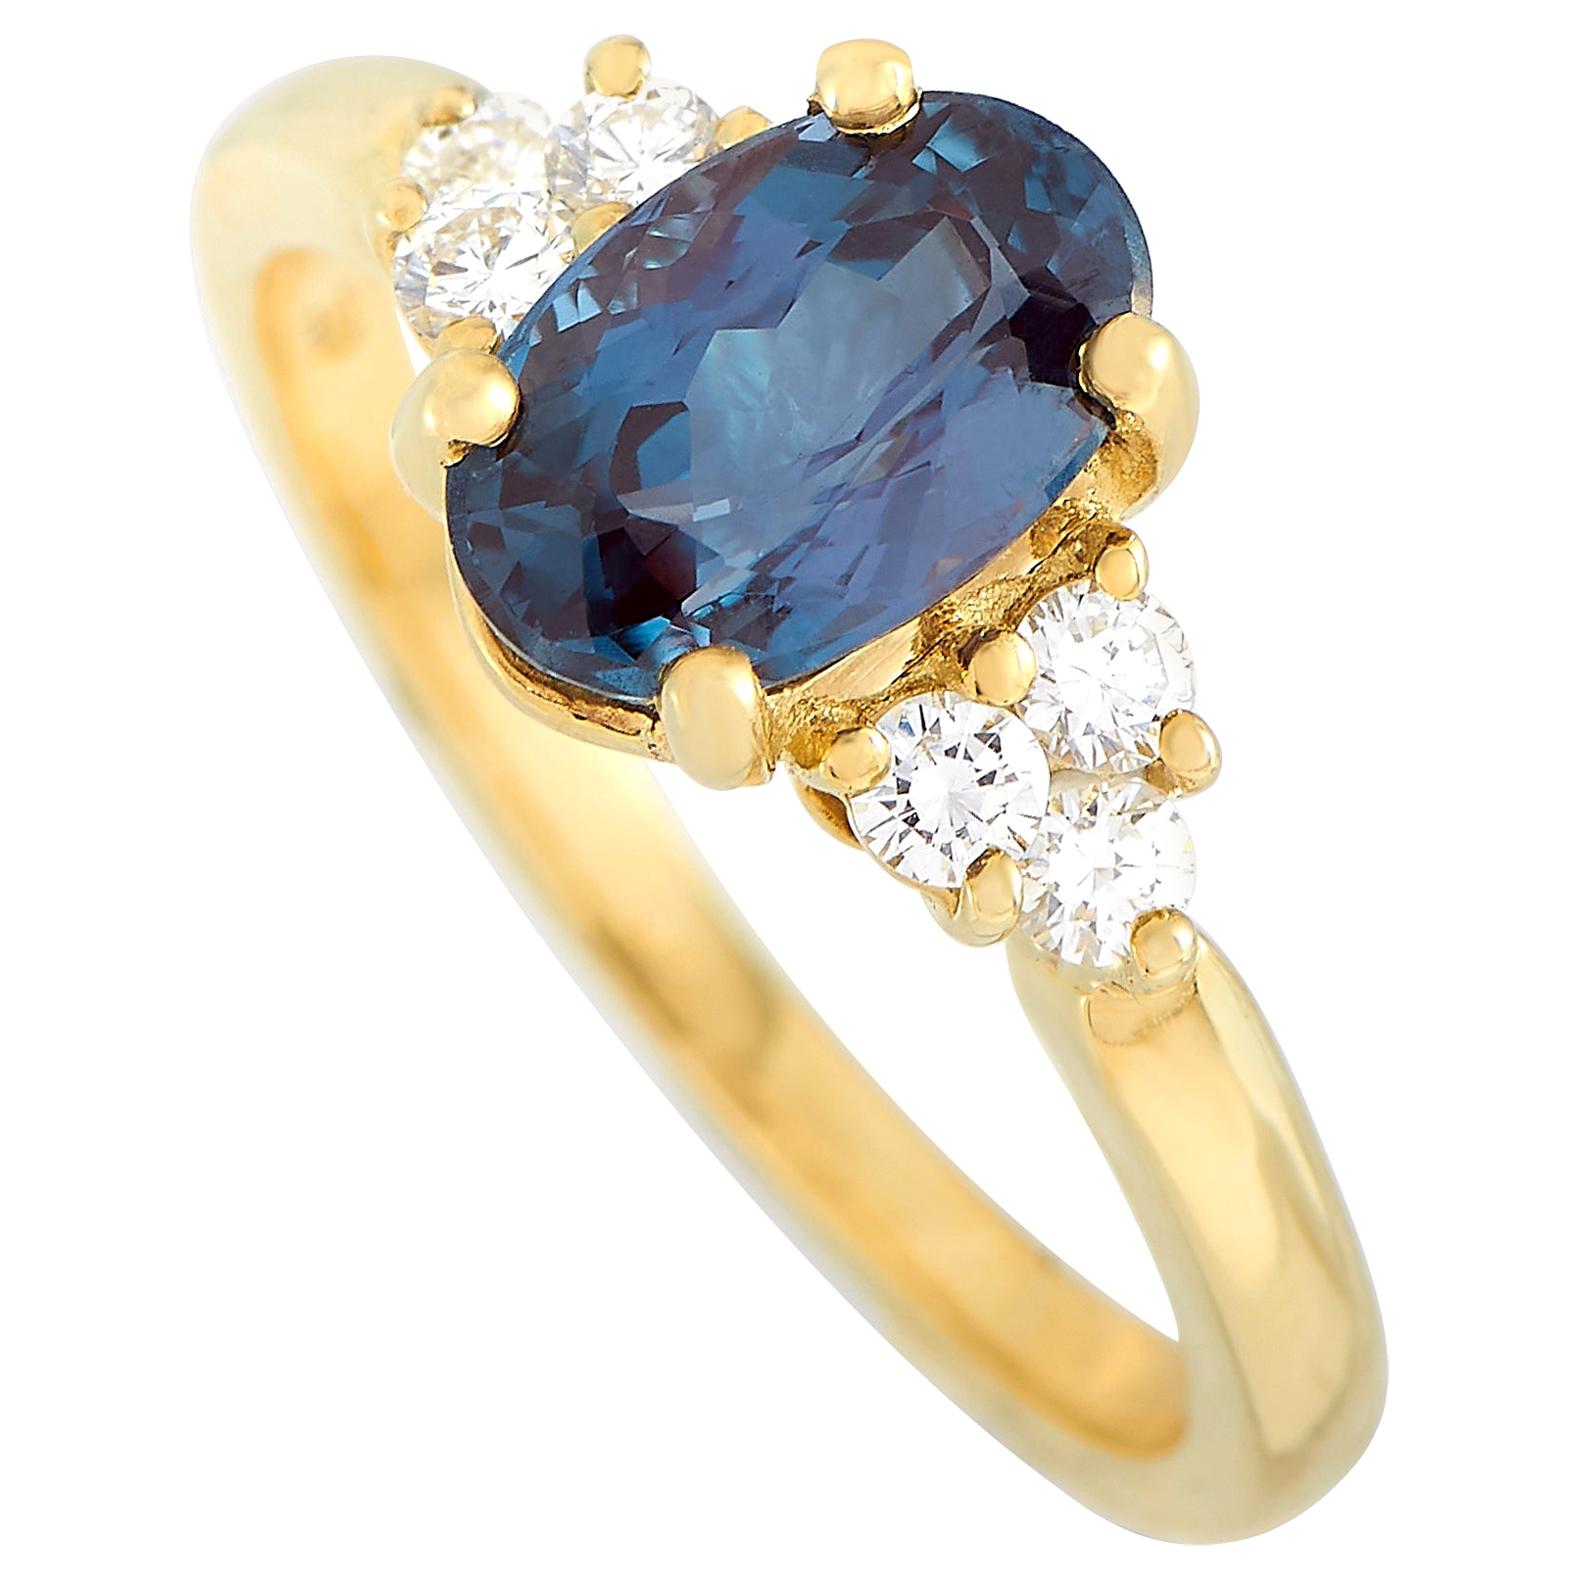 Tiffany & Co. 18 Karat Yellow Gold 0.21 Carat Diamond and Alexandrite Ring